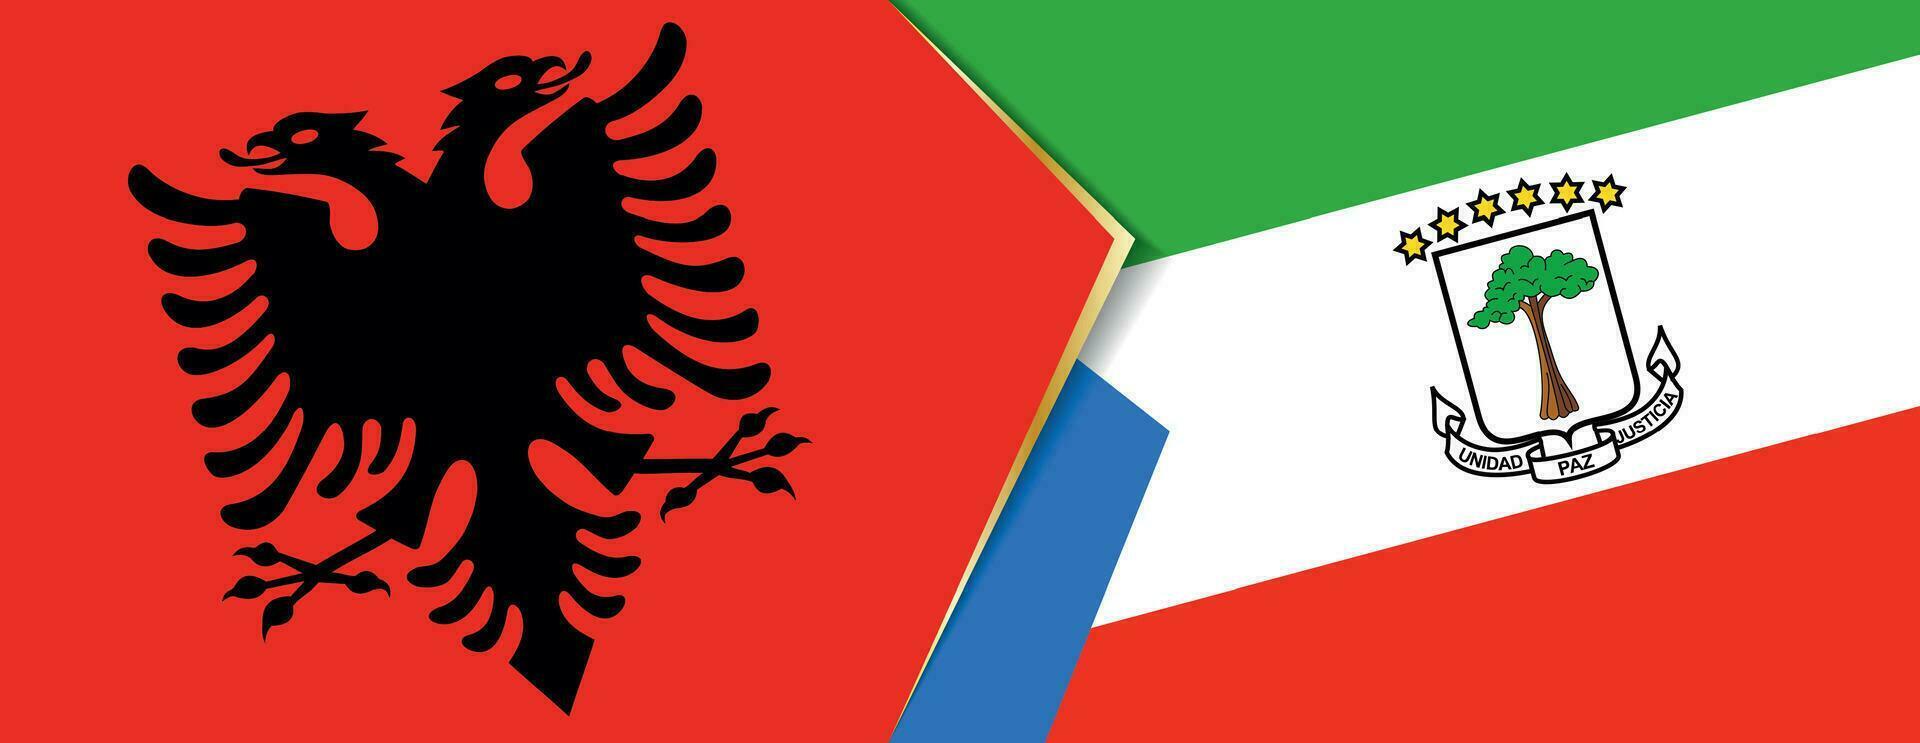 Albanien und äquatorial Guinea Flaggen, zwei Vektor Flaggen.